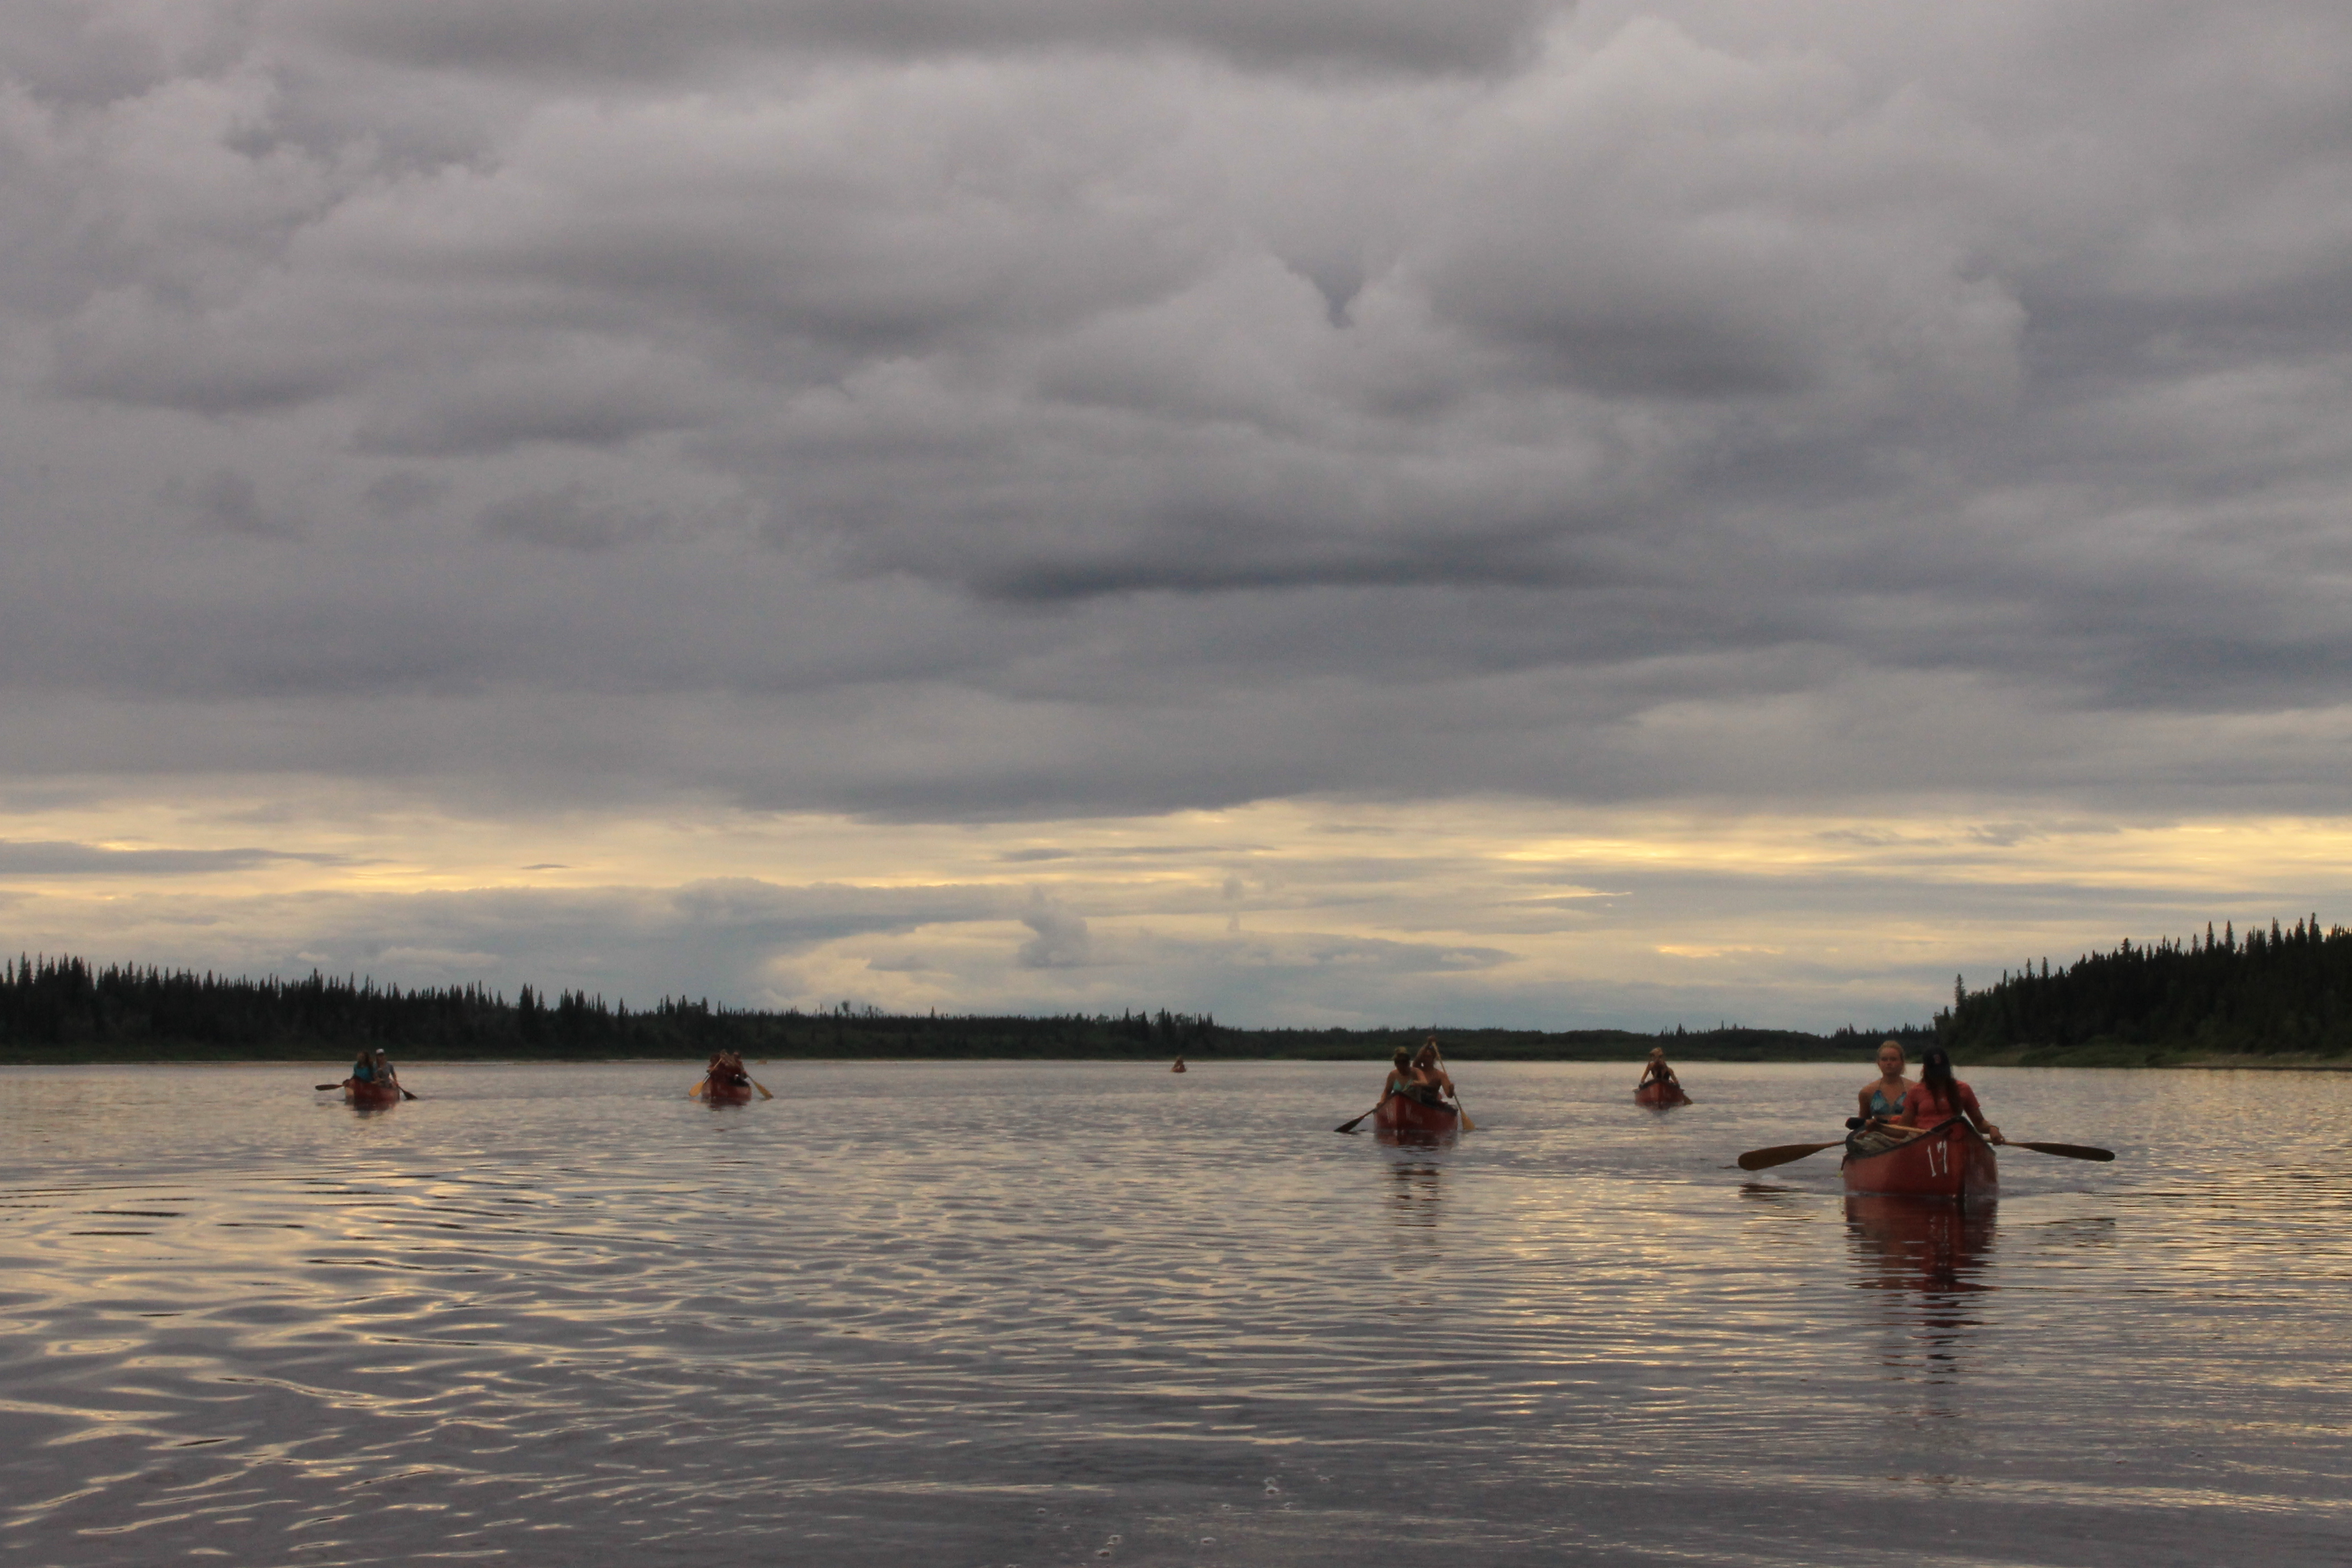 Canoeists paddling on a lake.